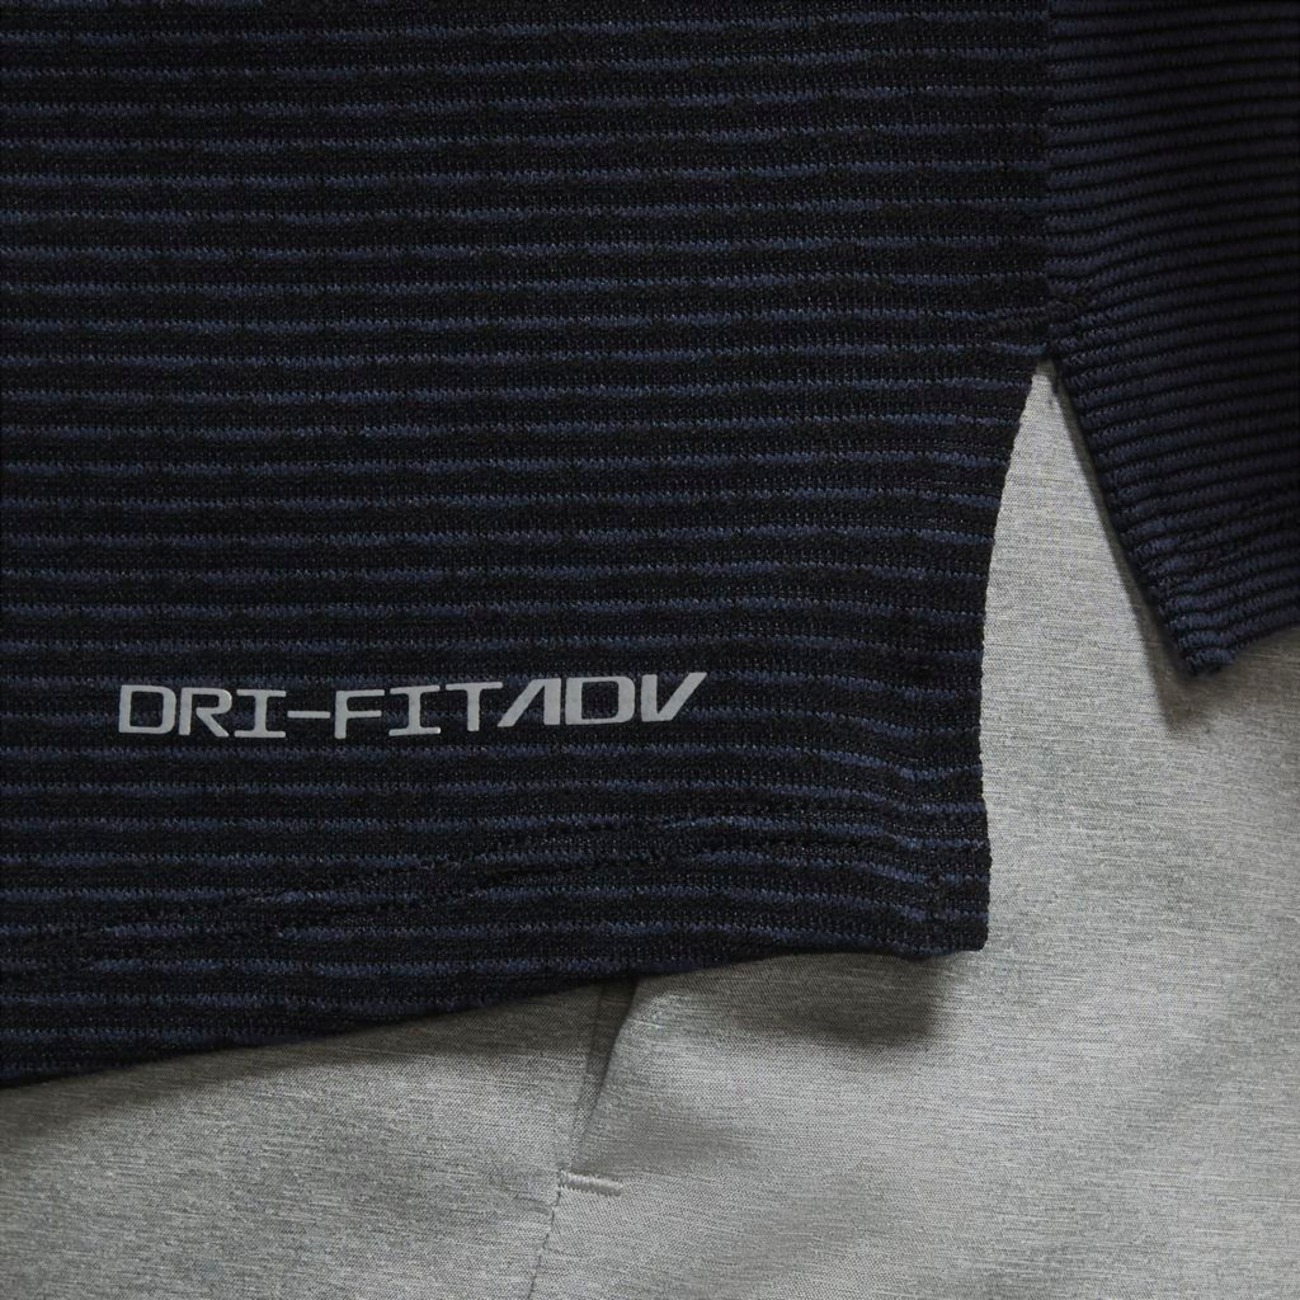 Camiseta Nike Dri-FIT ADV Run Division Techknit Masculina - Foto 3